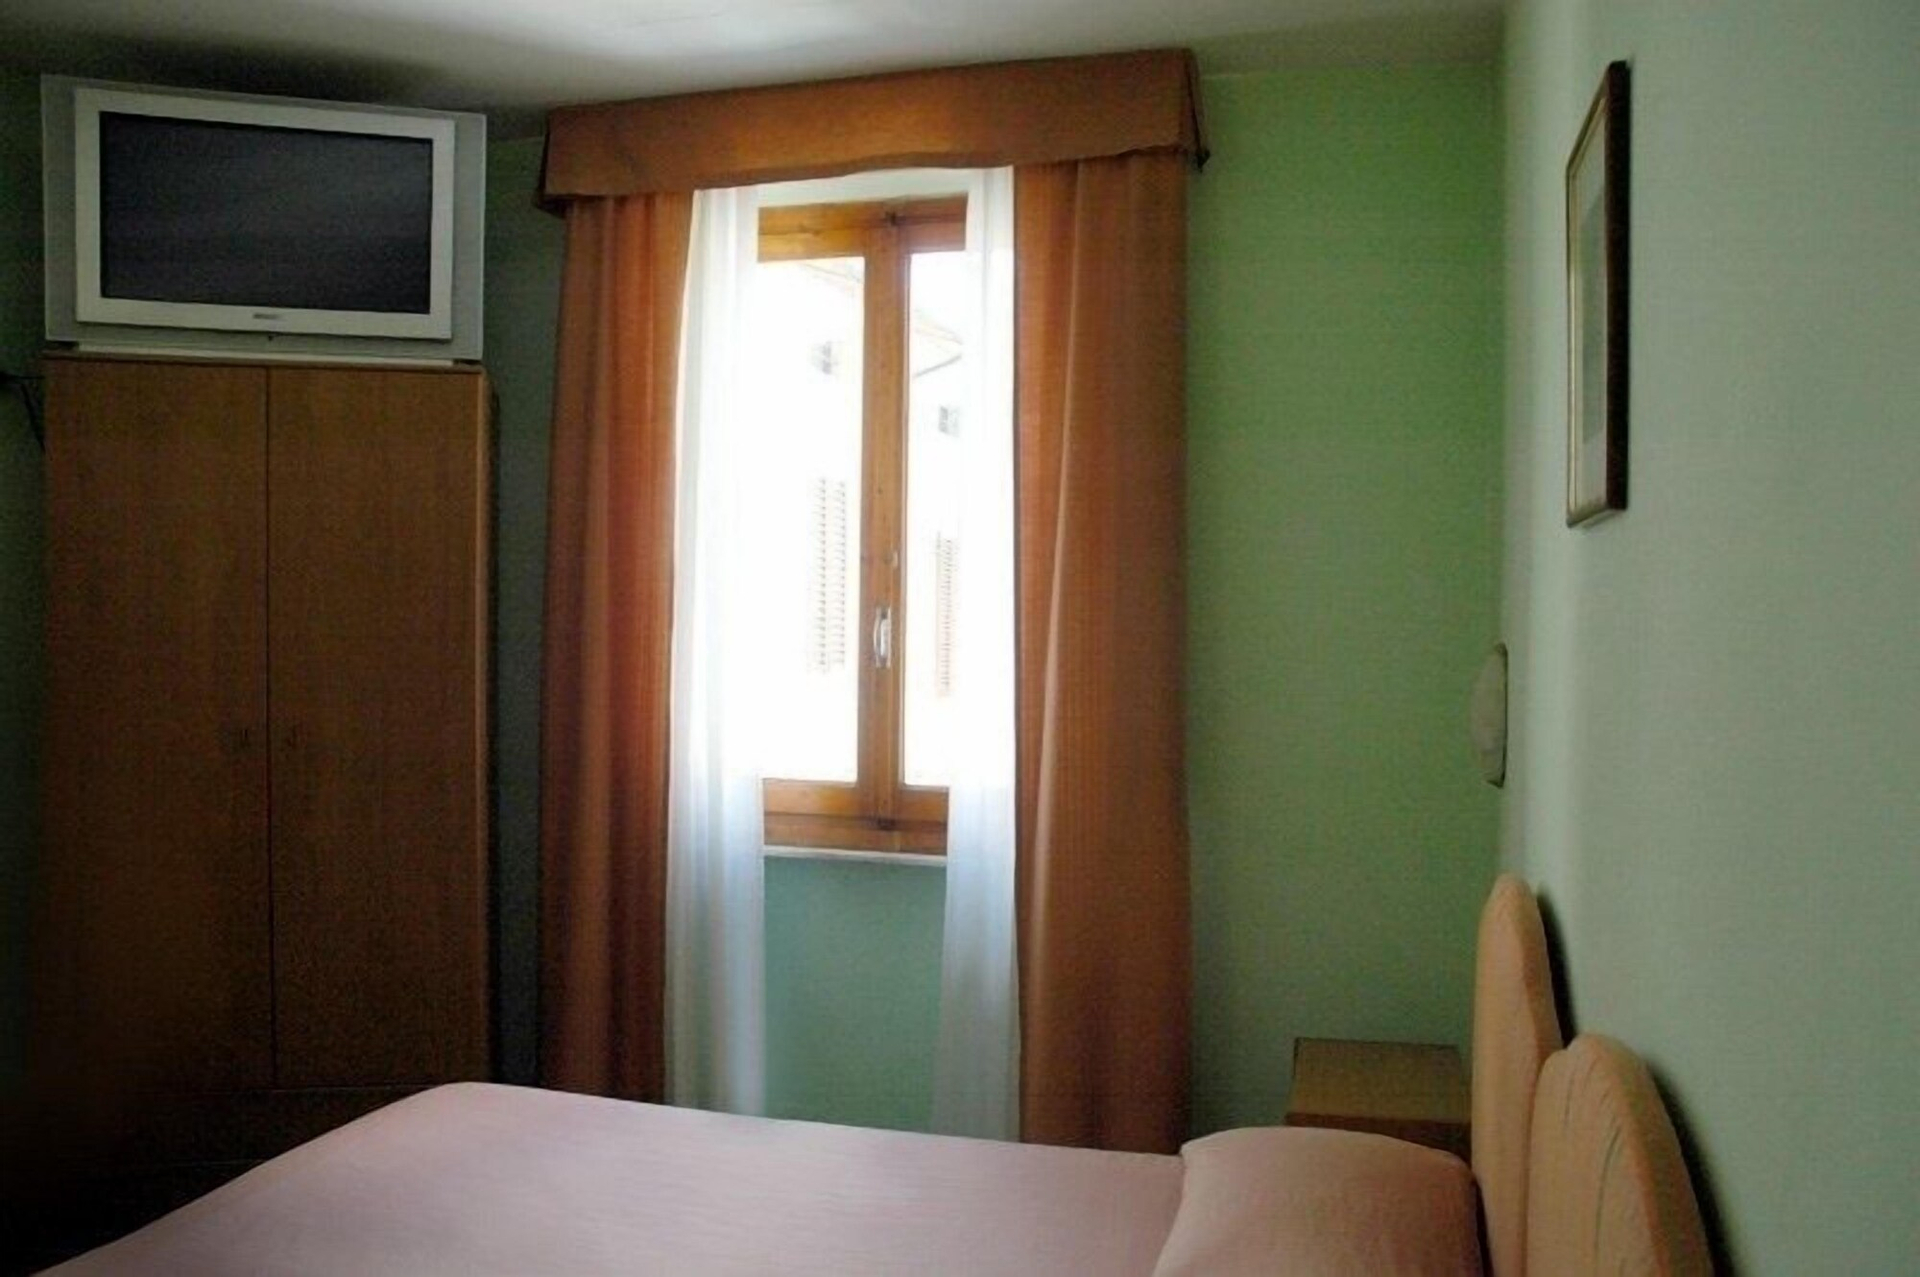 Room 3, Hotel Splendid, Pistoia